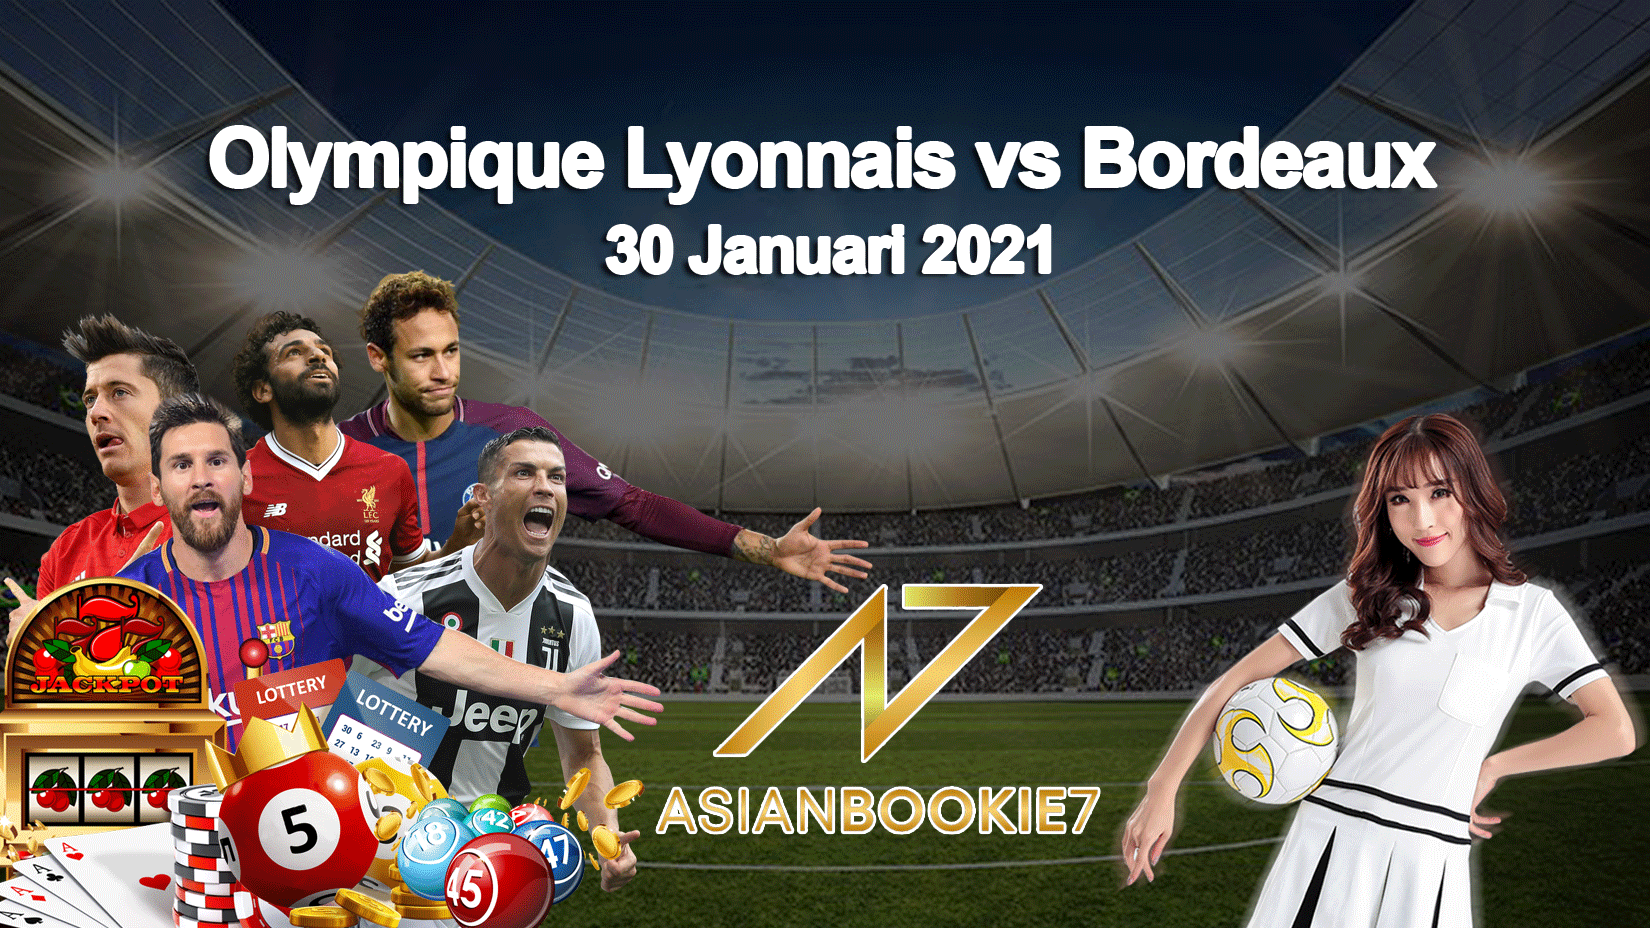 Prediksi-Olympique-Lyonnais-vs-Bordeaux-30-Januari-2021